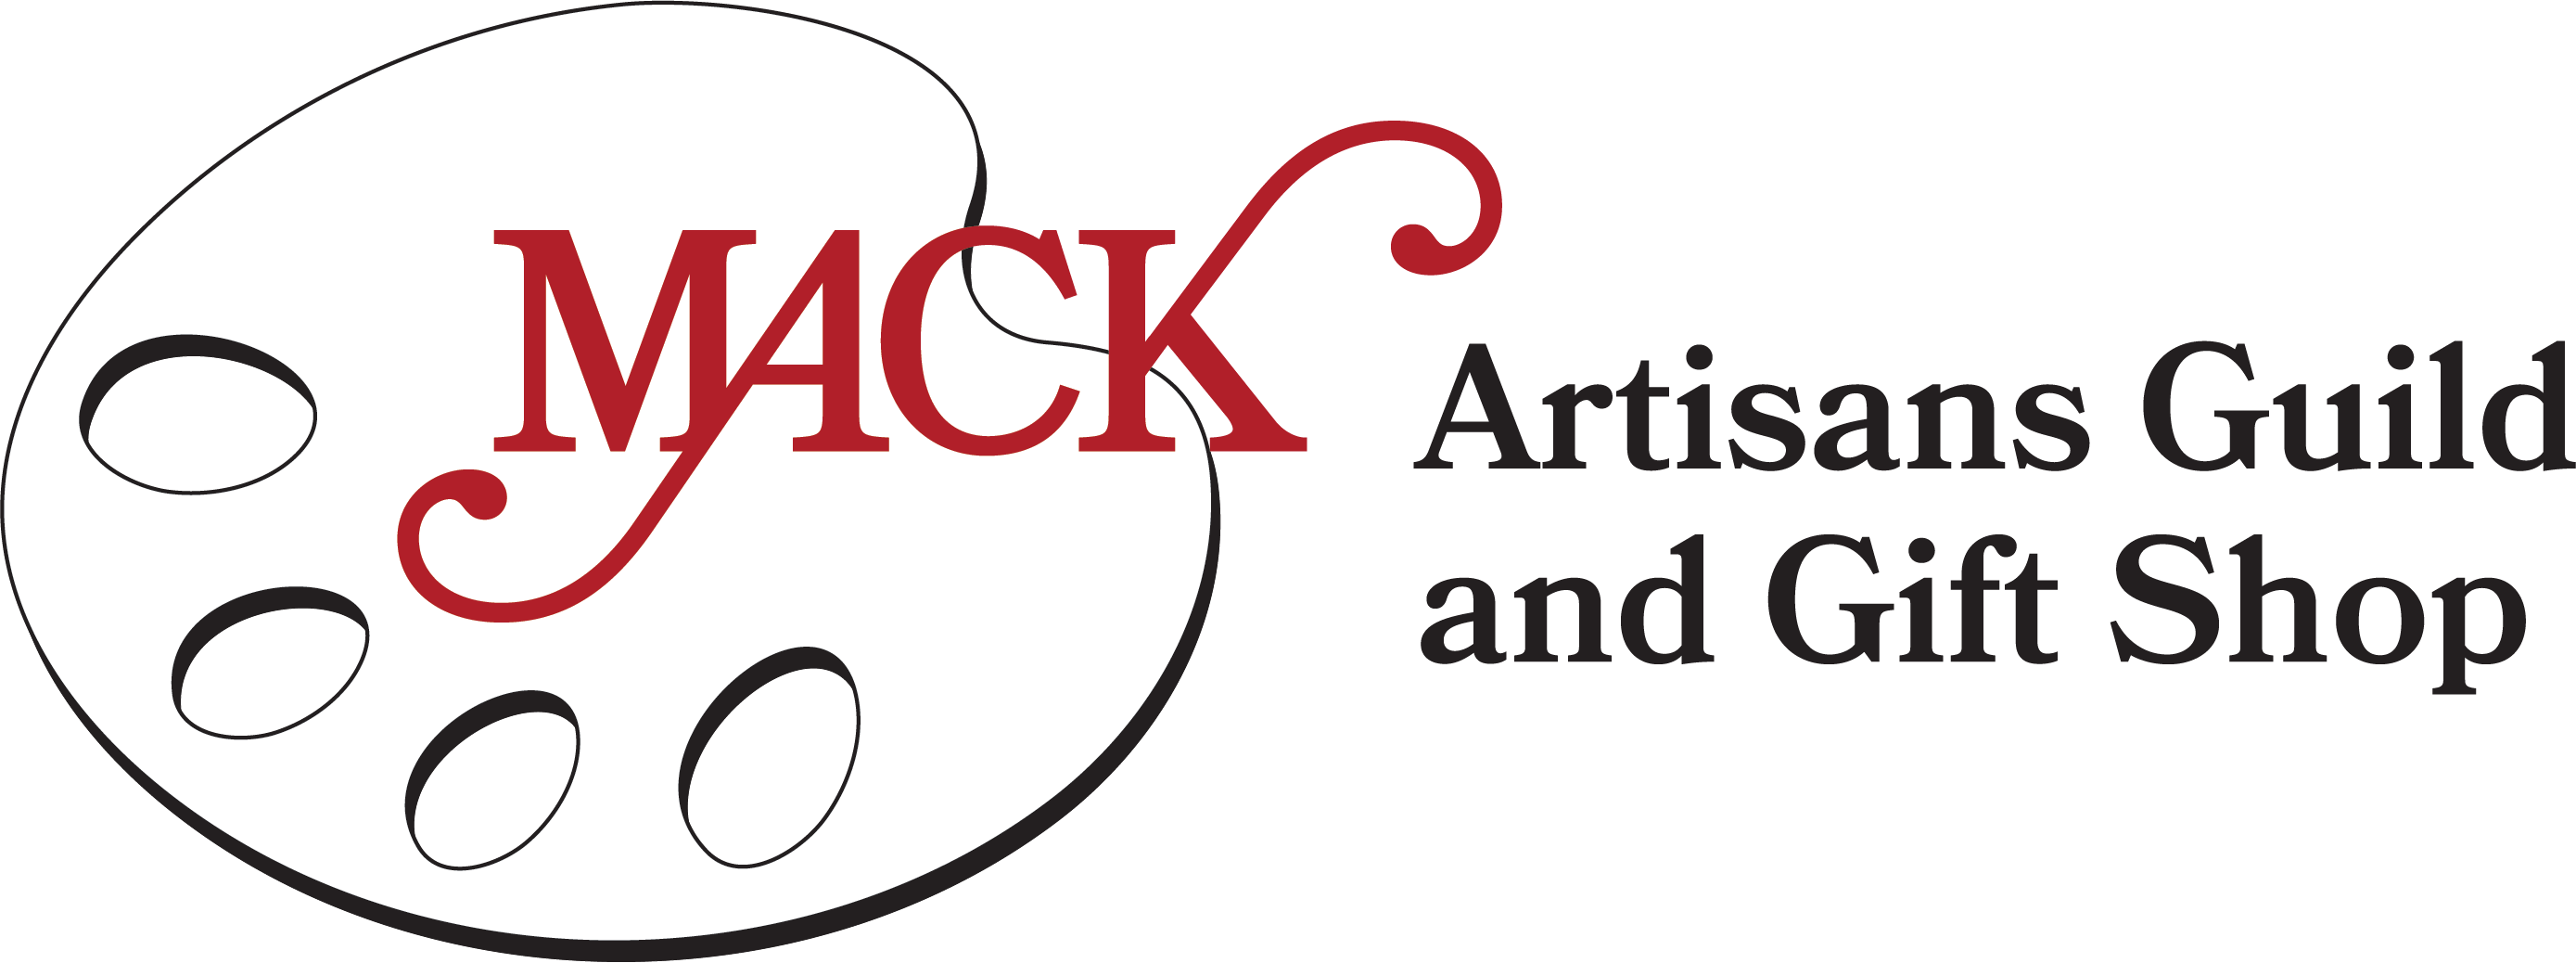 MACK Artisans Guild & Gift Shop - McCormick Arts Council at the